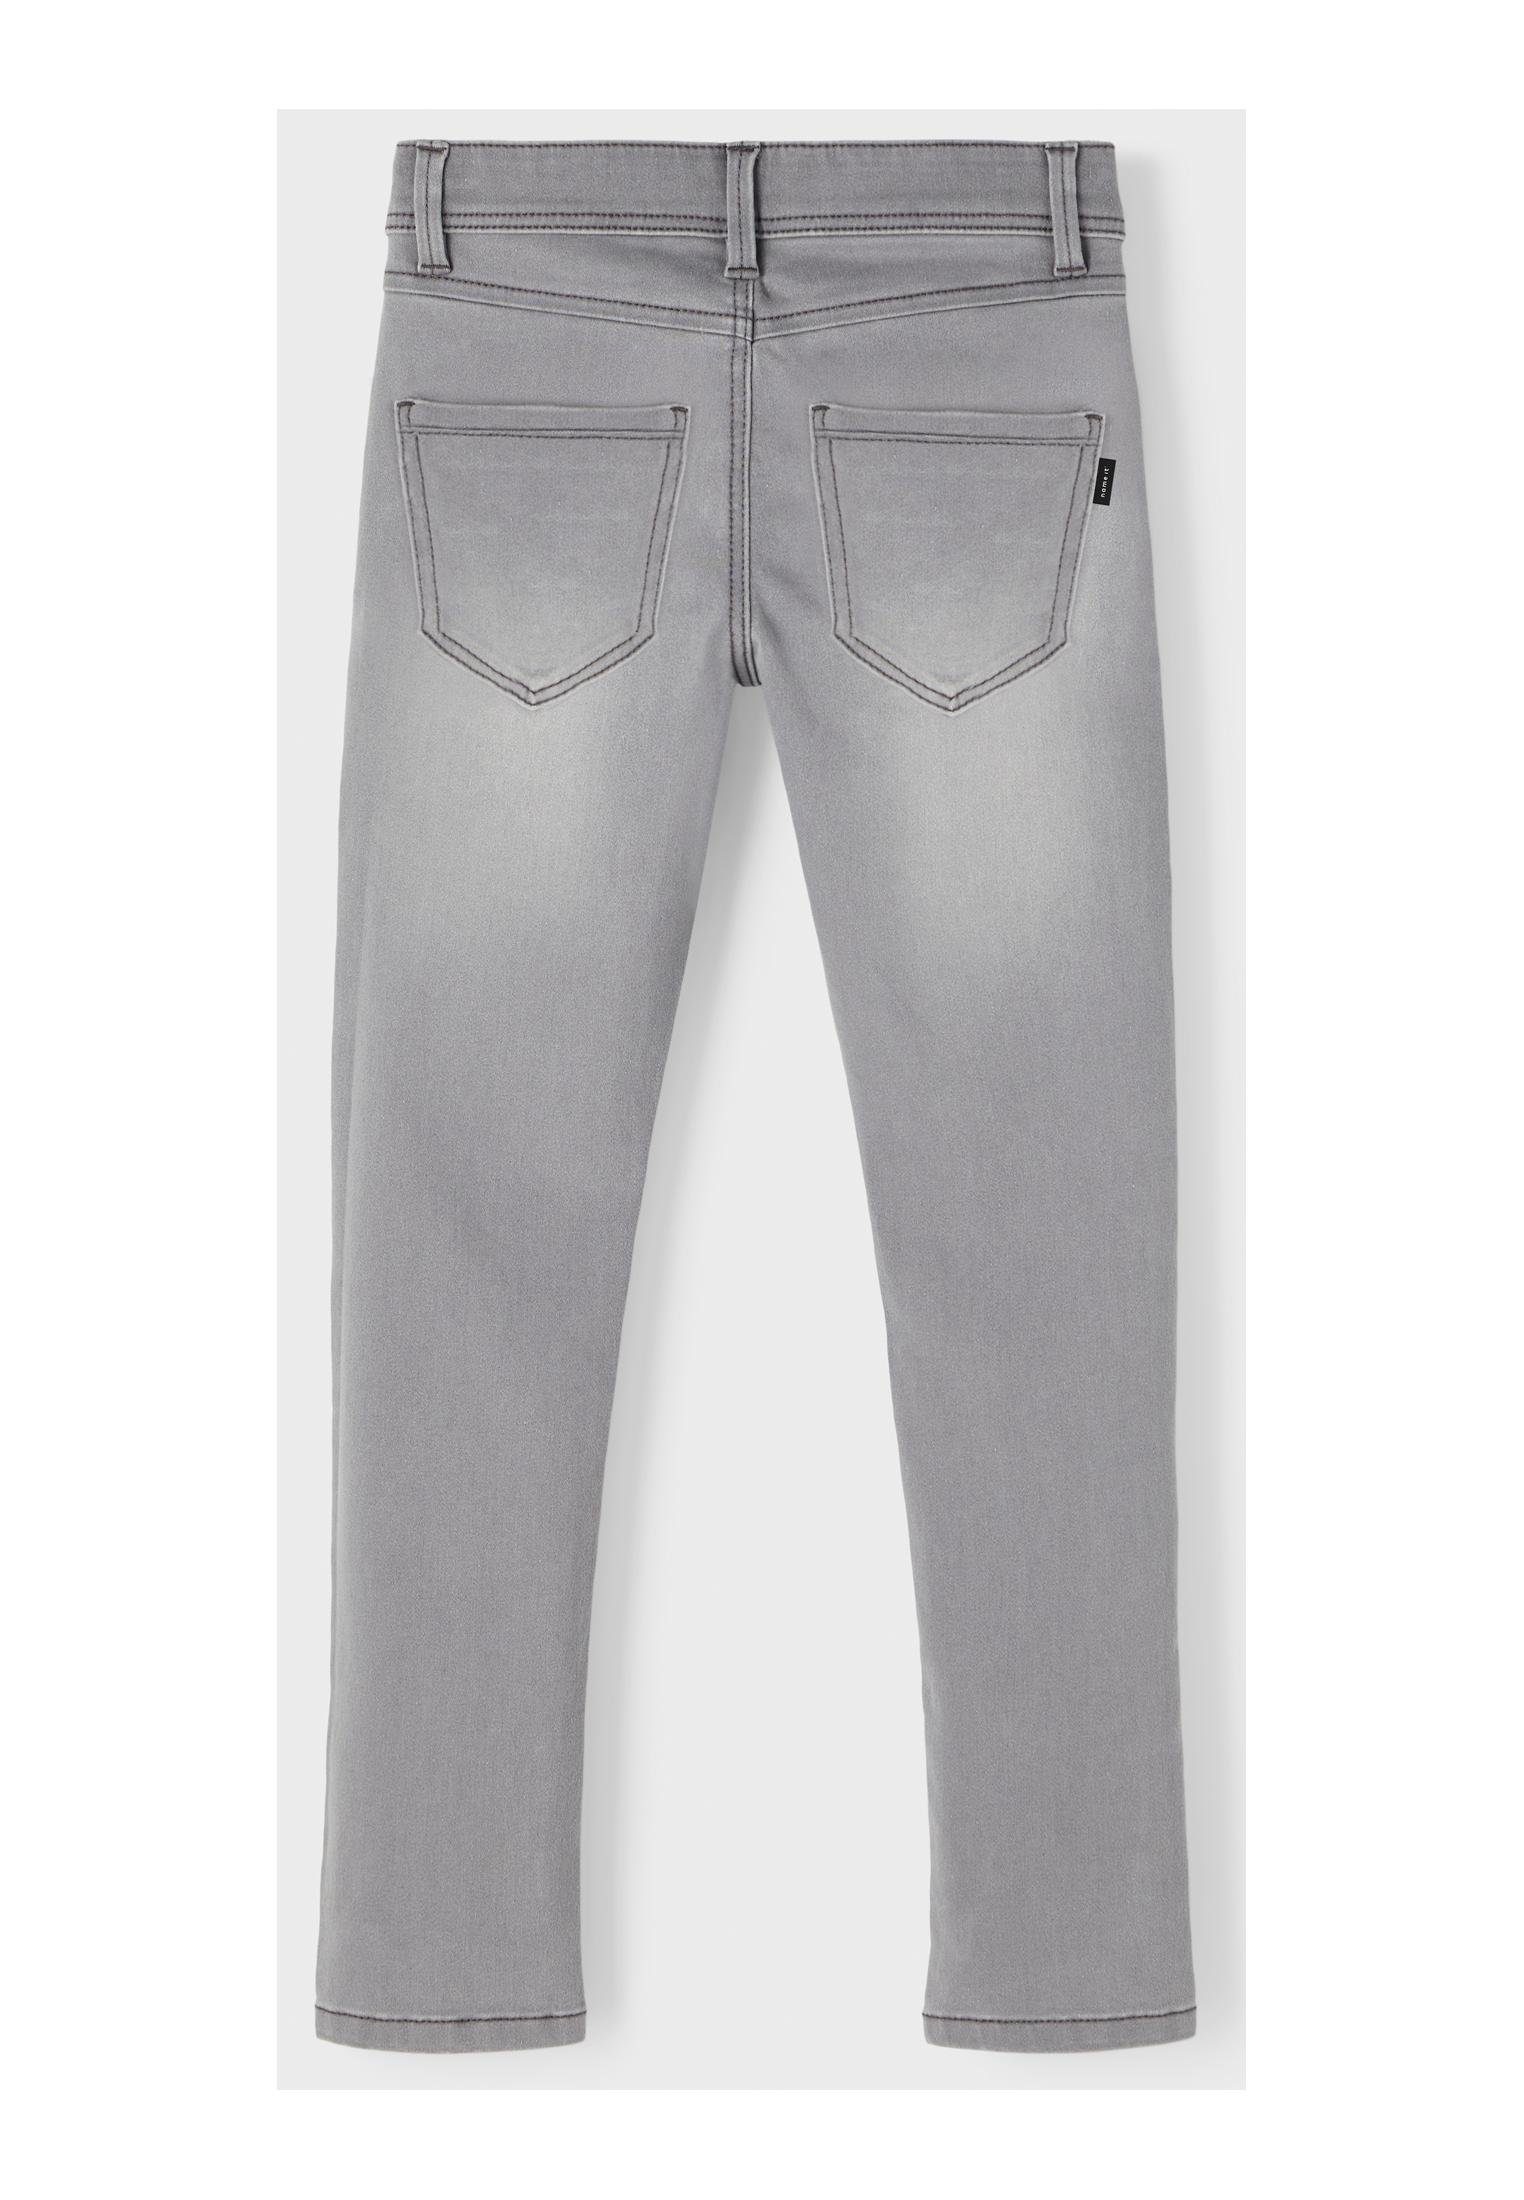 XSLIM Skinny-fit-Jeans NKMSILAS It grey medium Name JEANS 2002-TX denim